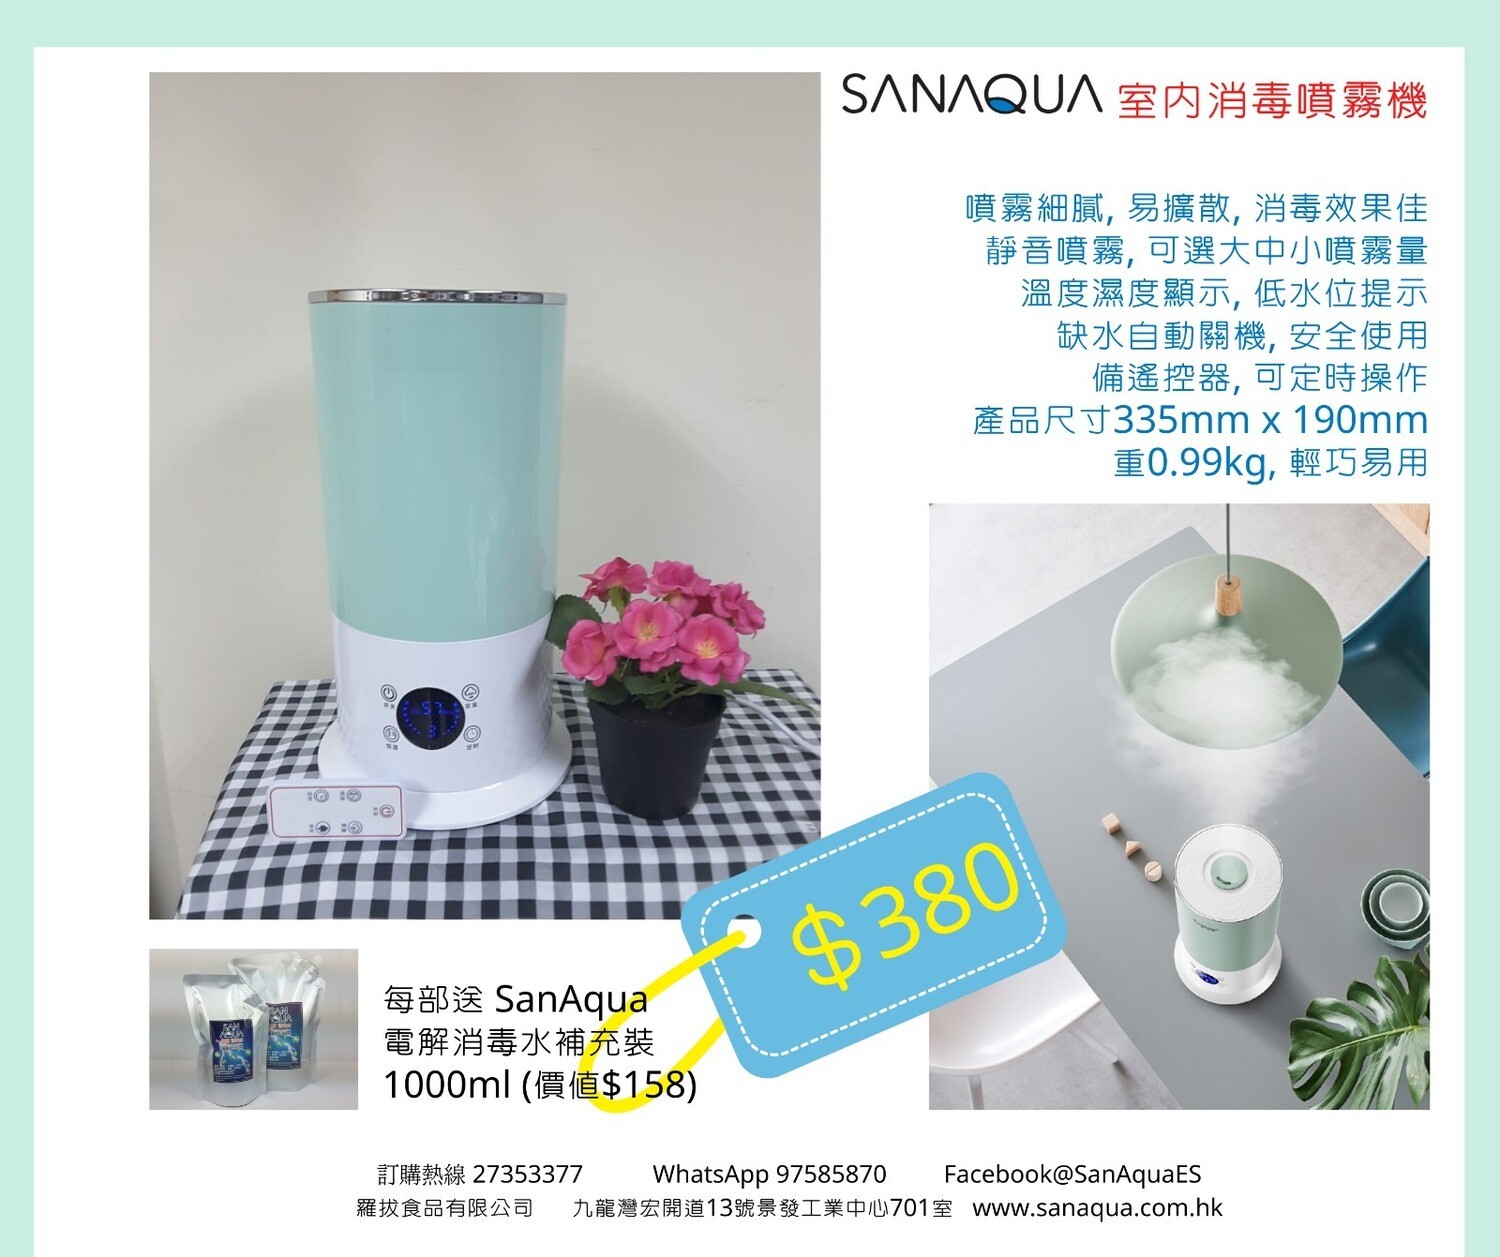 SanAqua 室內消毒噴霧機套裝 (附送 SanAqua 電解消毒水 1000ml) SanAqua Indoor Sanitizing Sprayer Set (Free refill 1000ml)